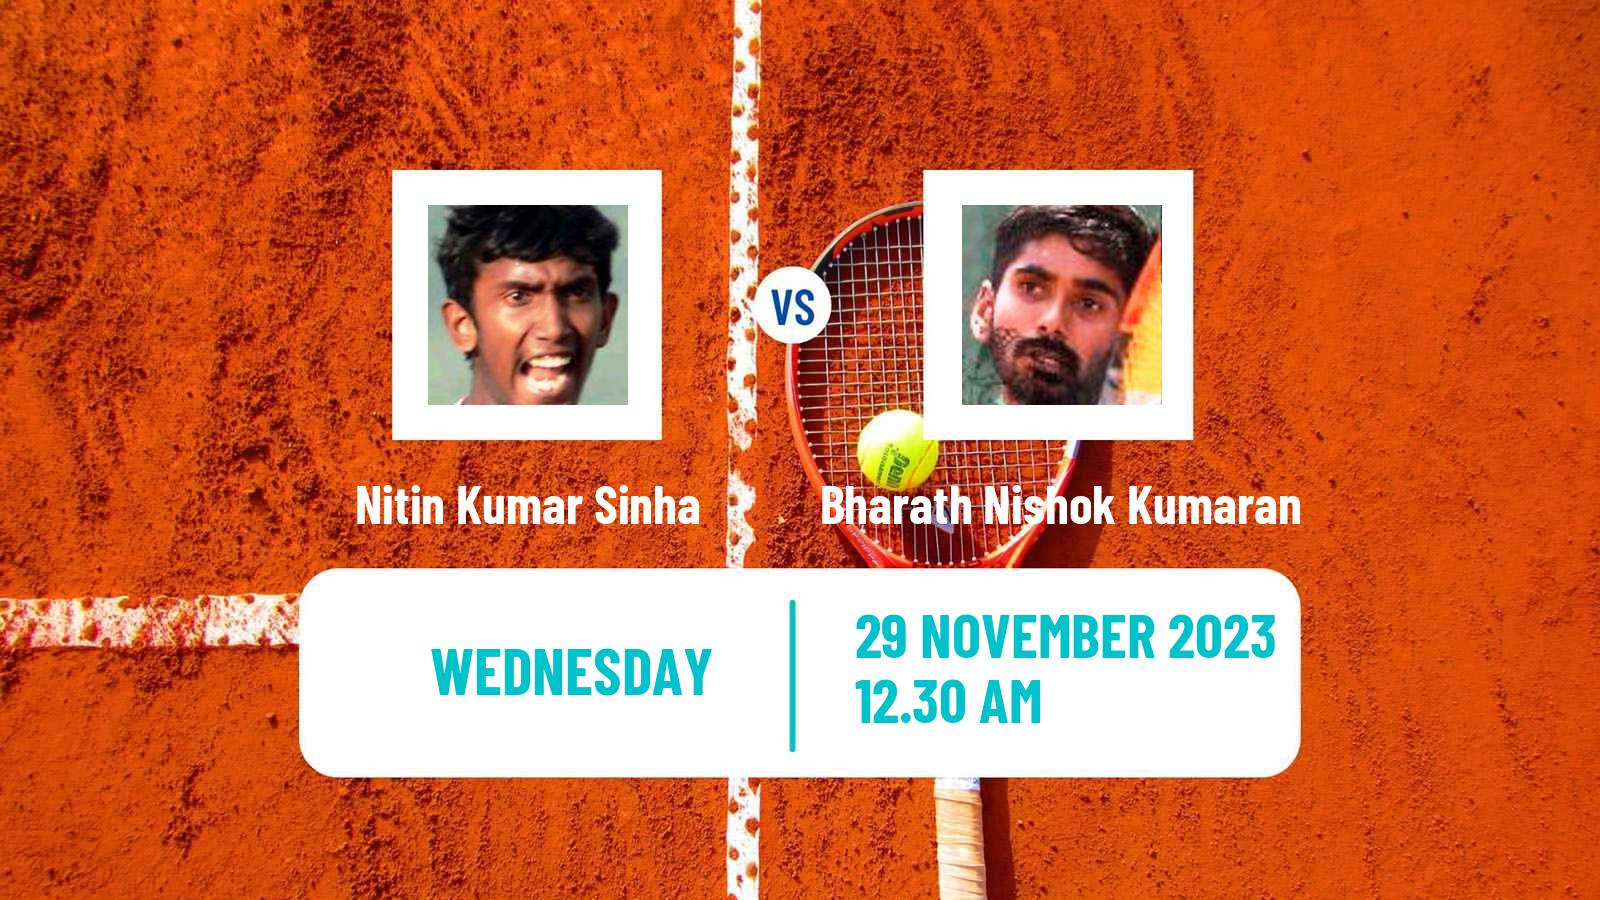 Tennis ITF M25 Kalaburagi Men Nitin Kumar Sinha - Bharath Nishok Kumaran